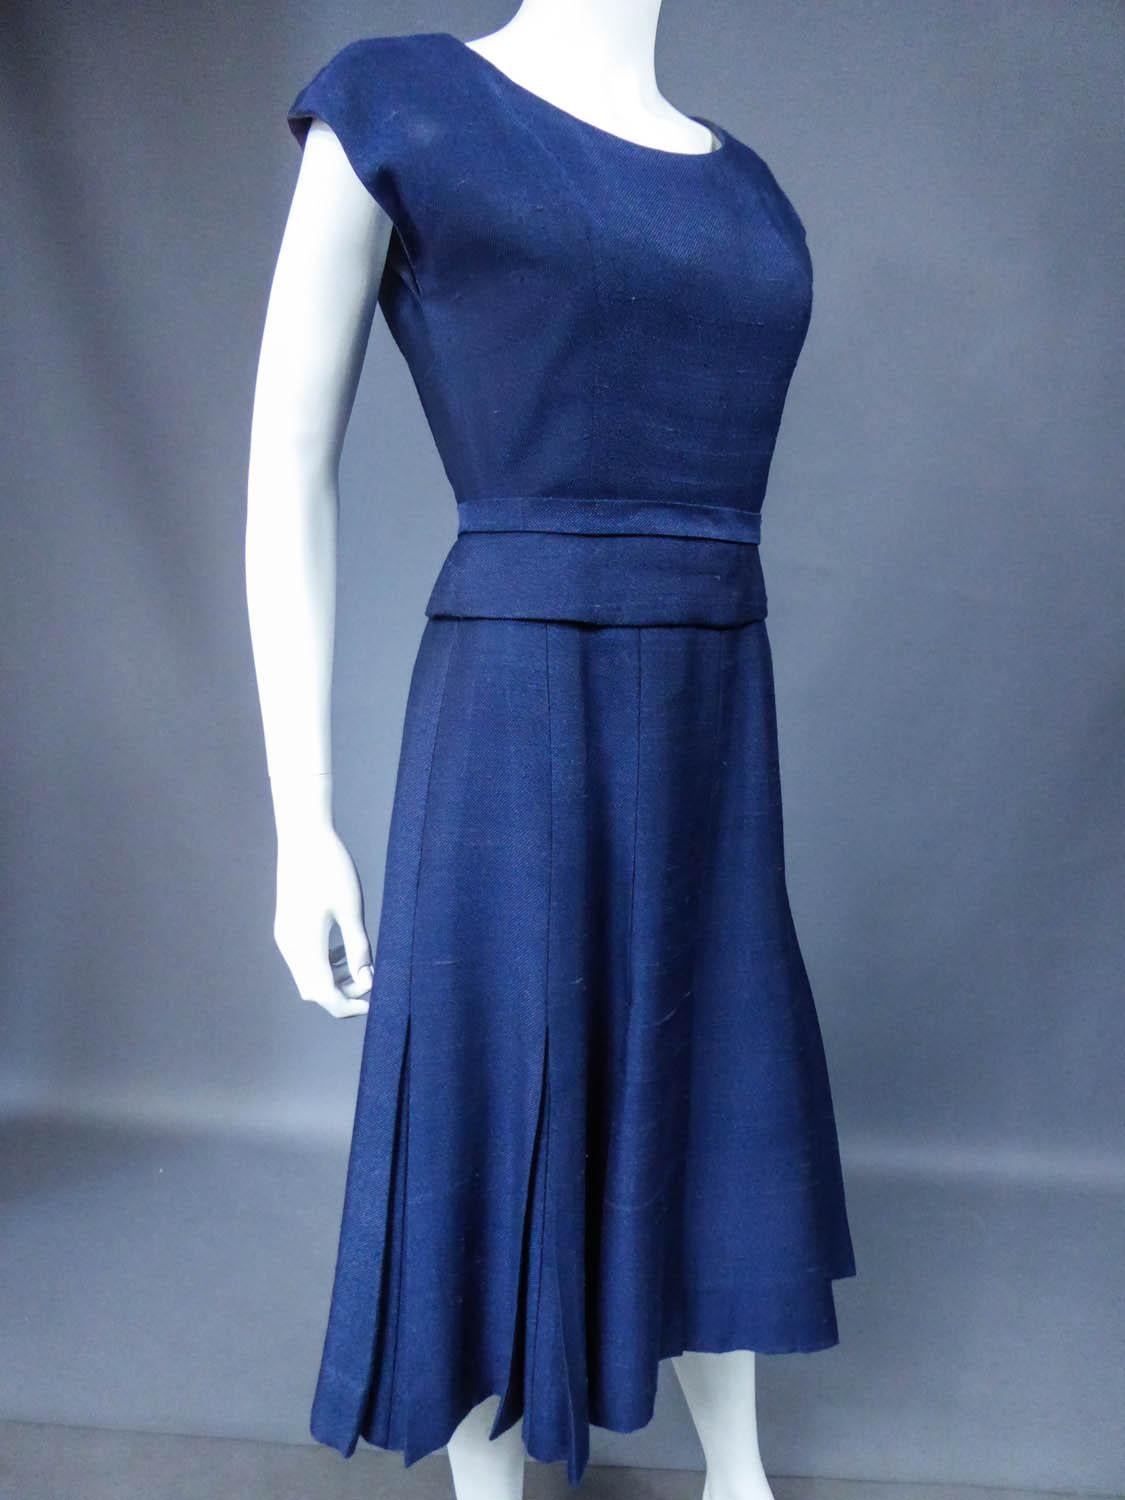 Jacques Heim Couture Dress and Jacket Set Circa 1956 7